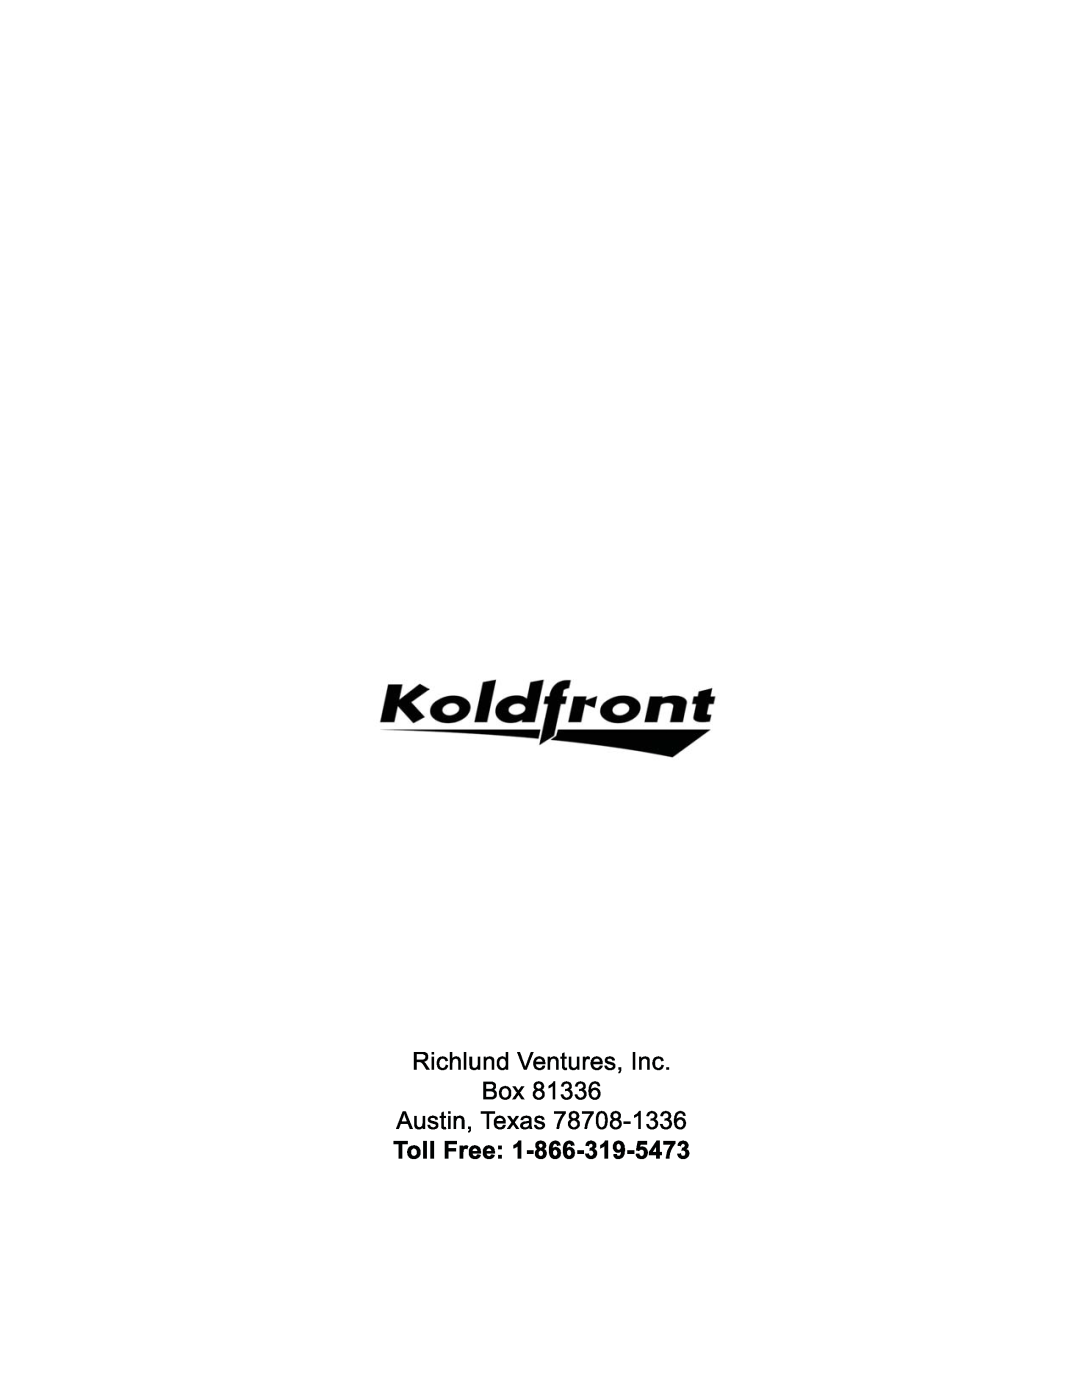 KoldFront PDW45E manual 